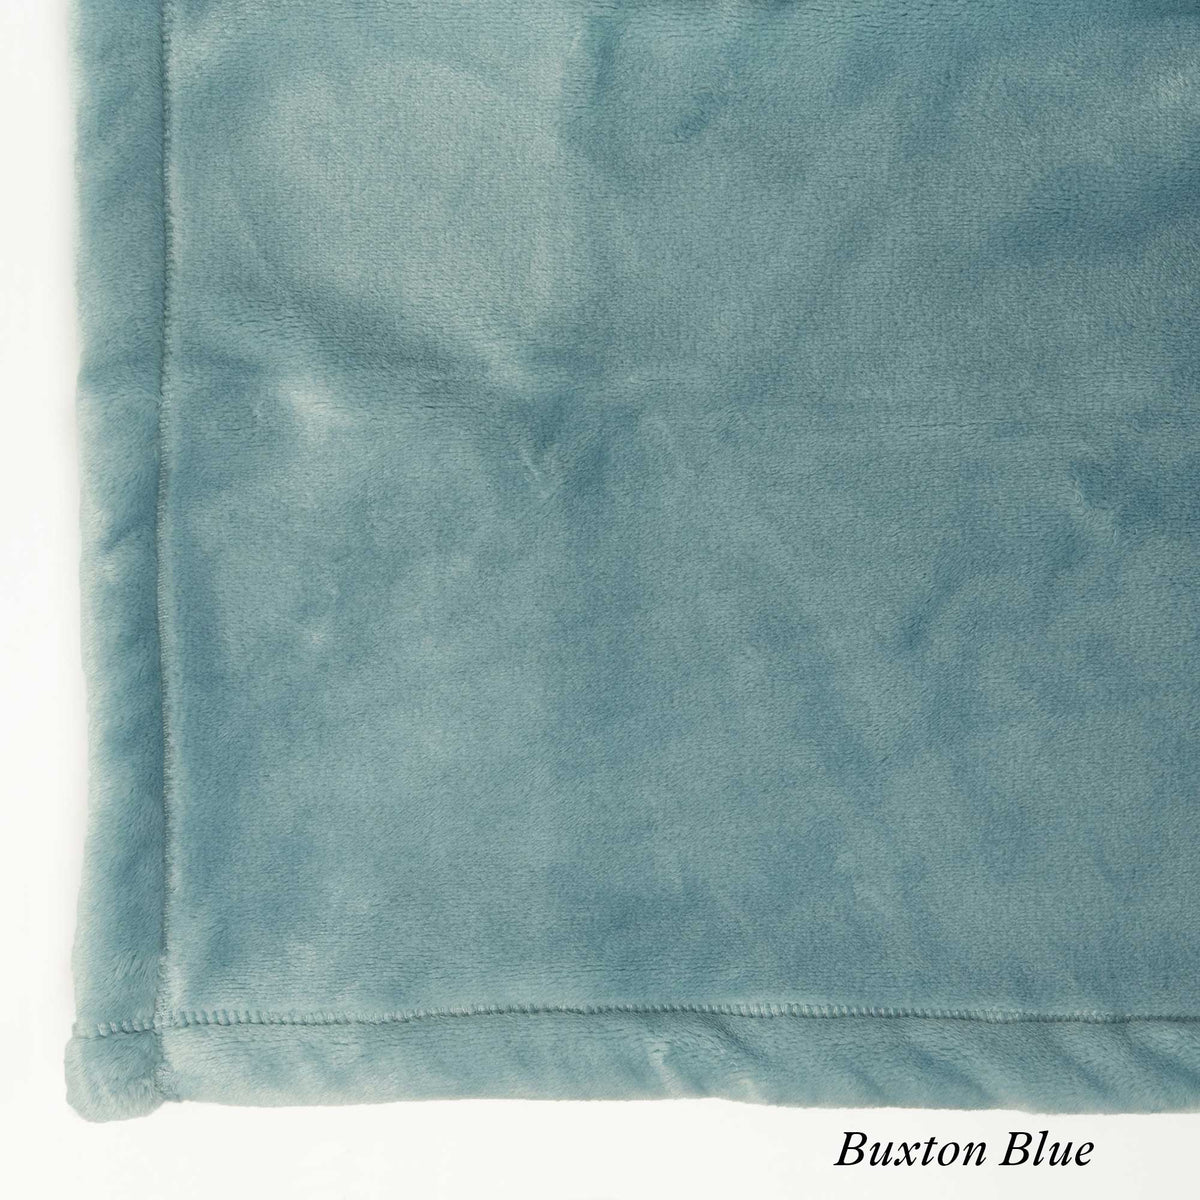 Buxton Blue - The Best Fleece Blankets - Custom Size Luster Loft Fleece Blankets - American Blanket Company